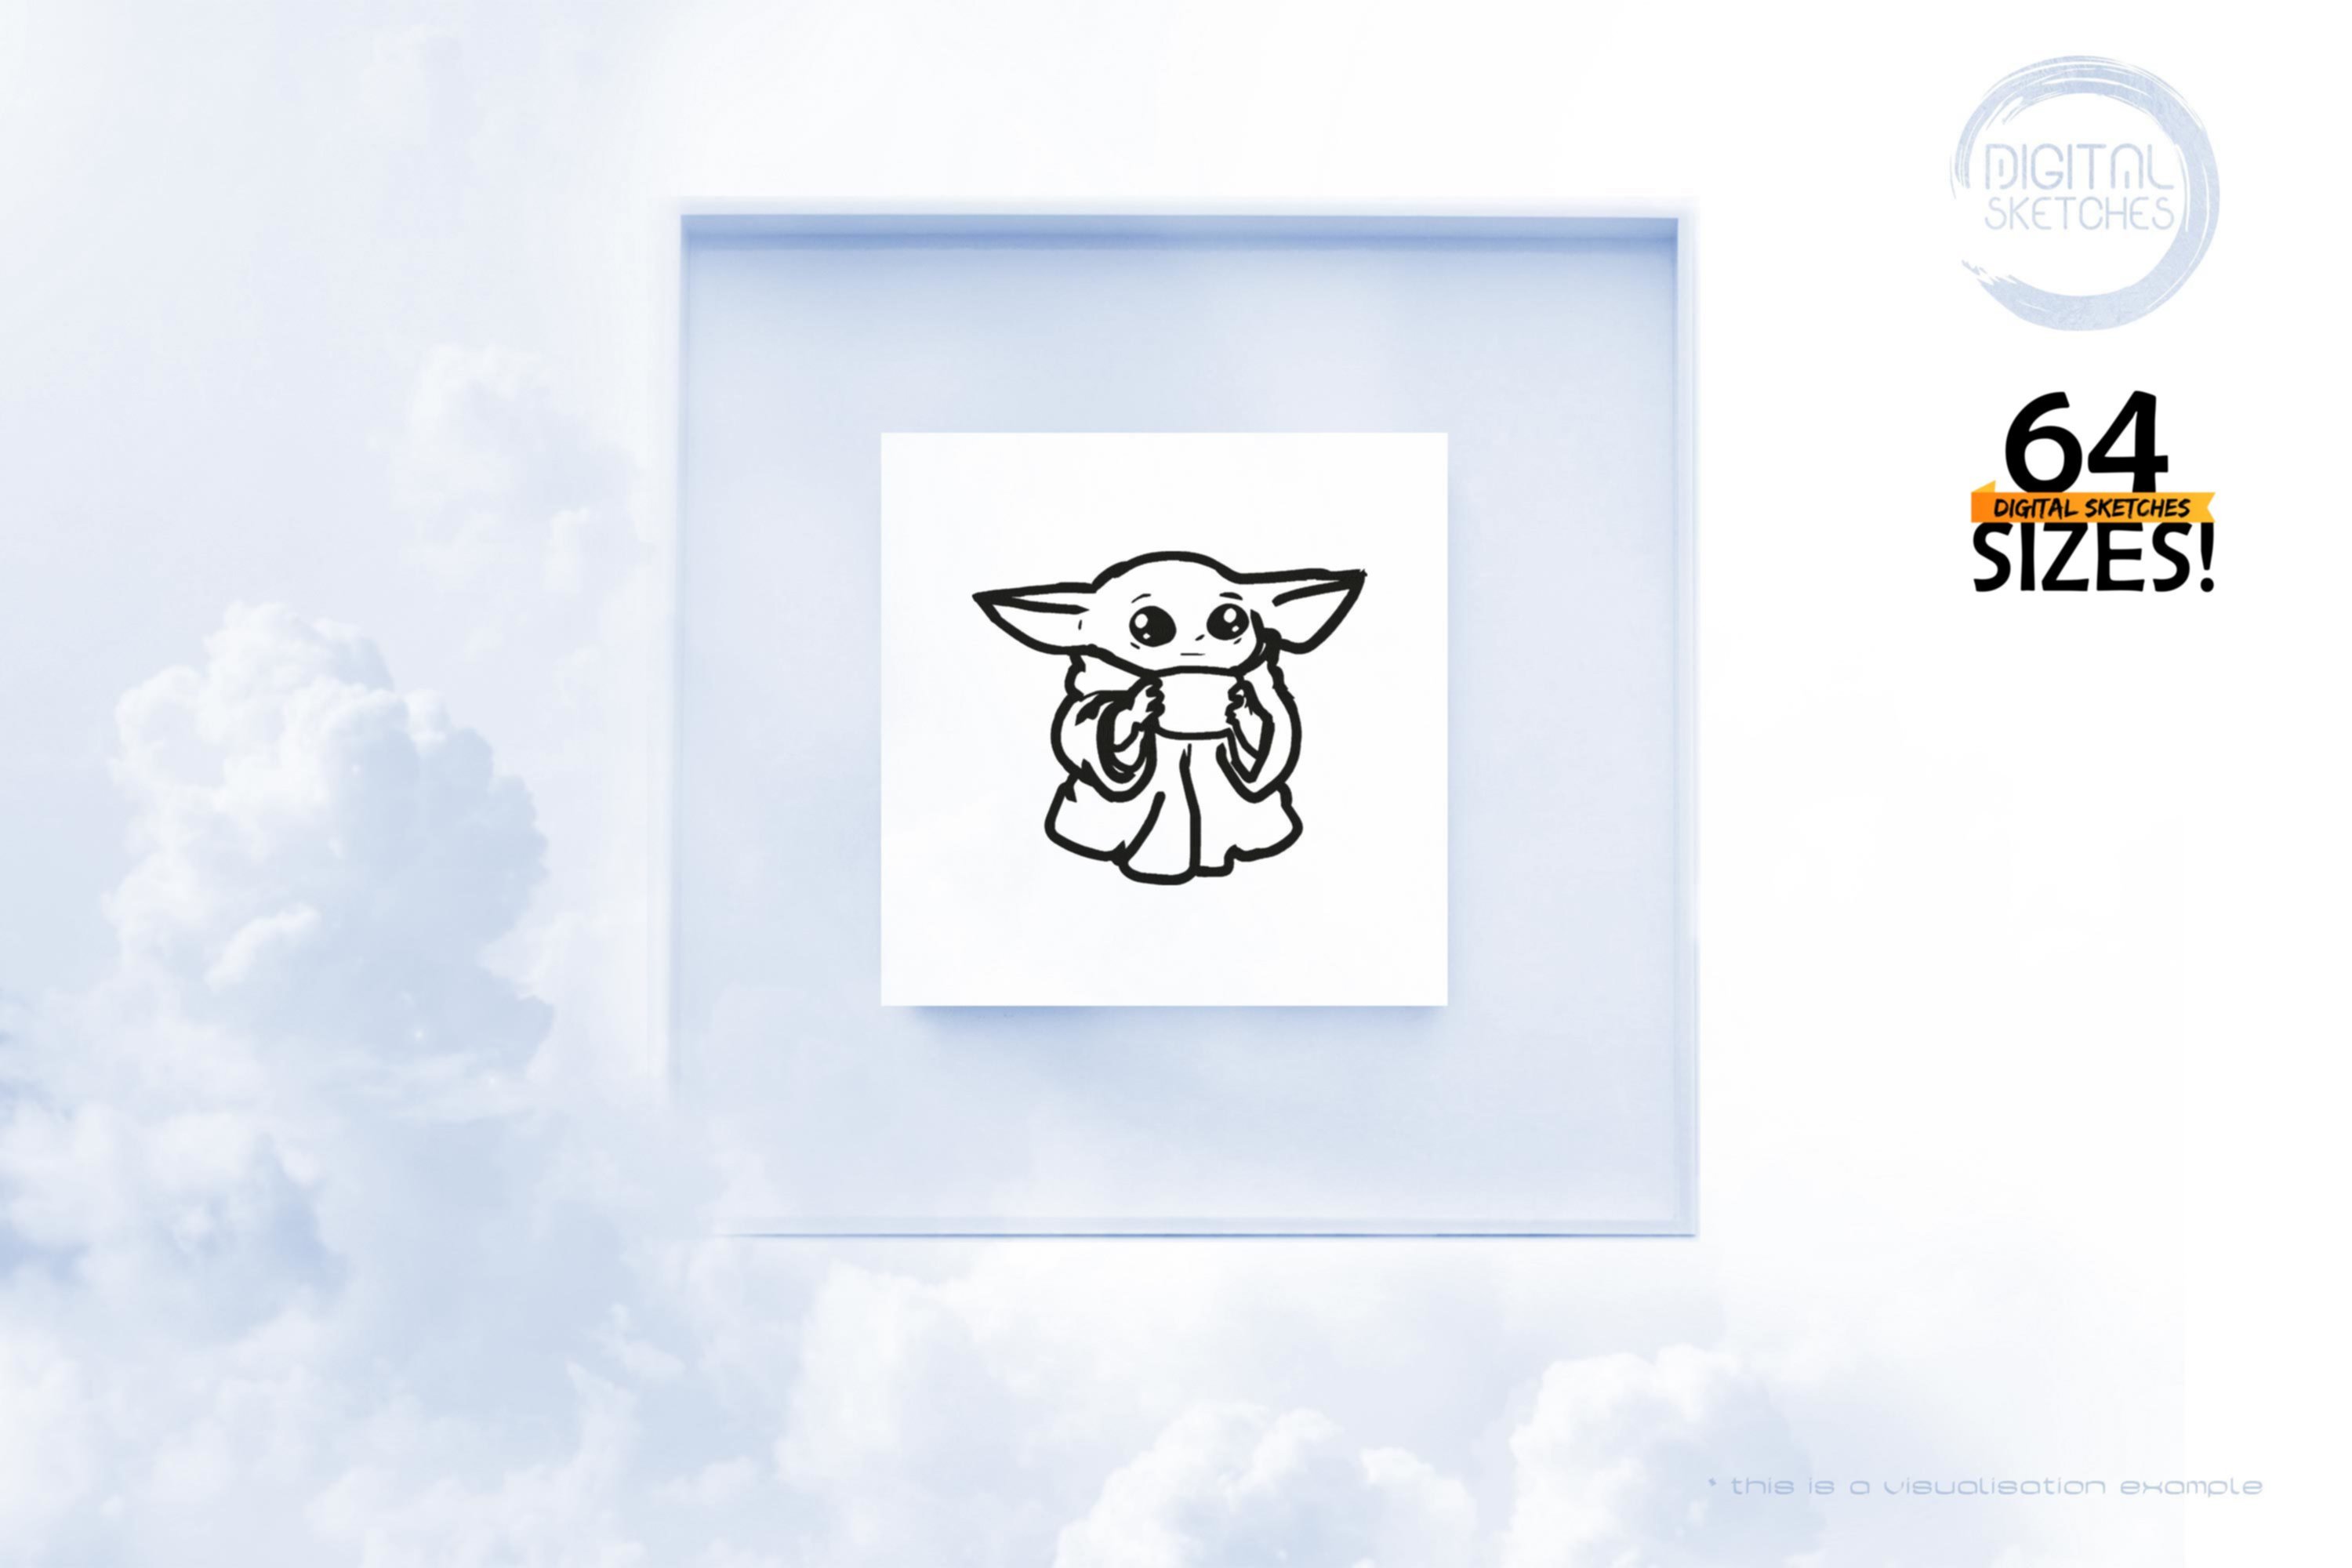 Tribute To Fictional Character Grogu aka Baby Yoda (Outline Drawing)